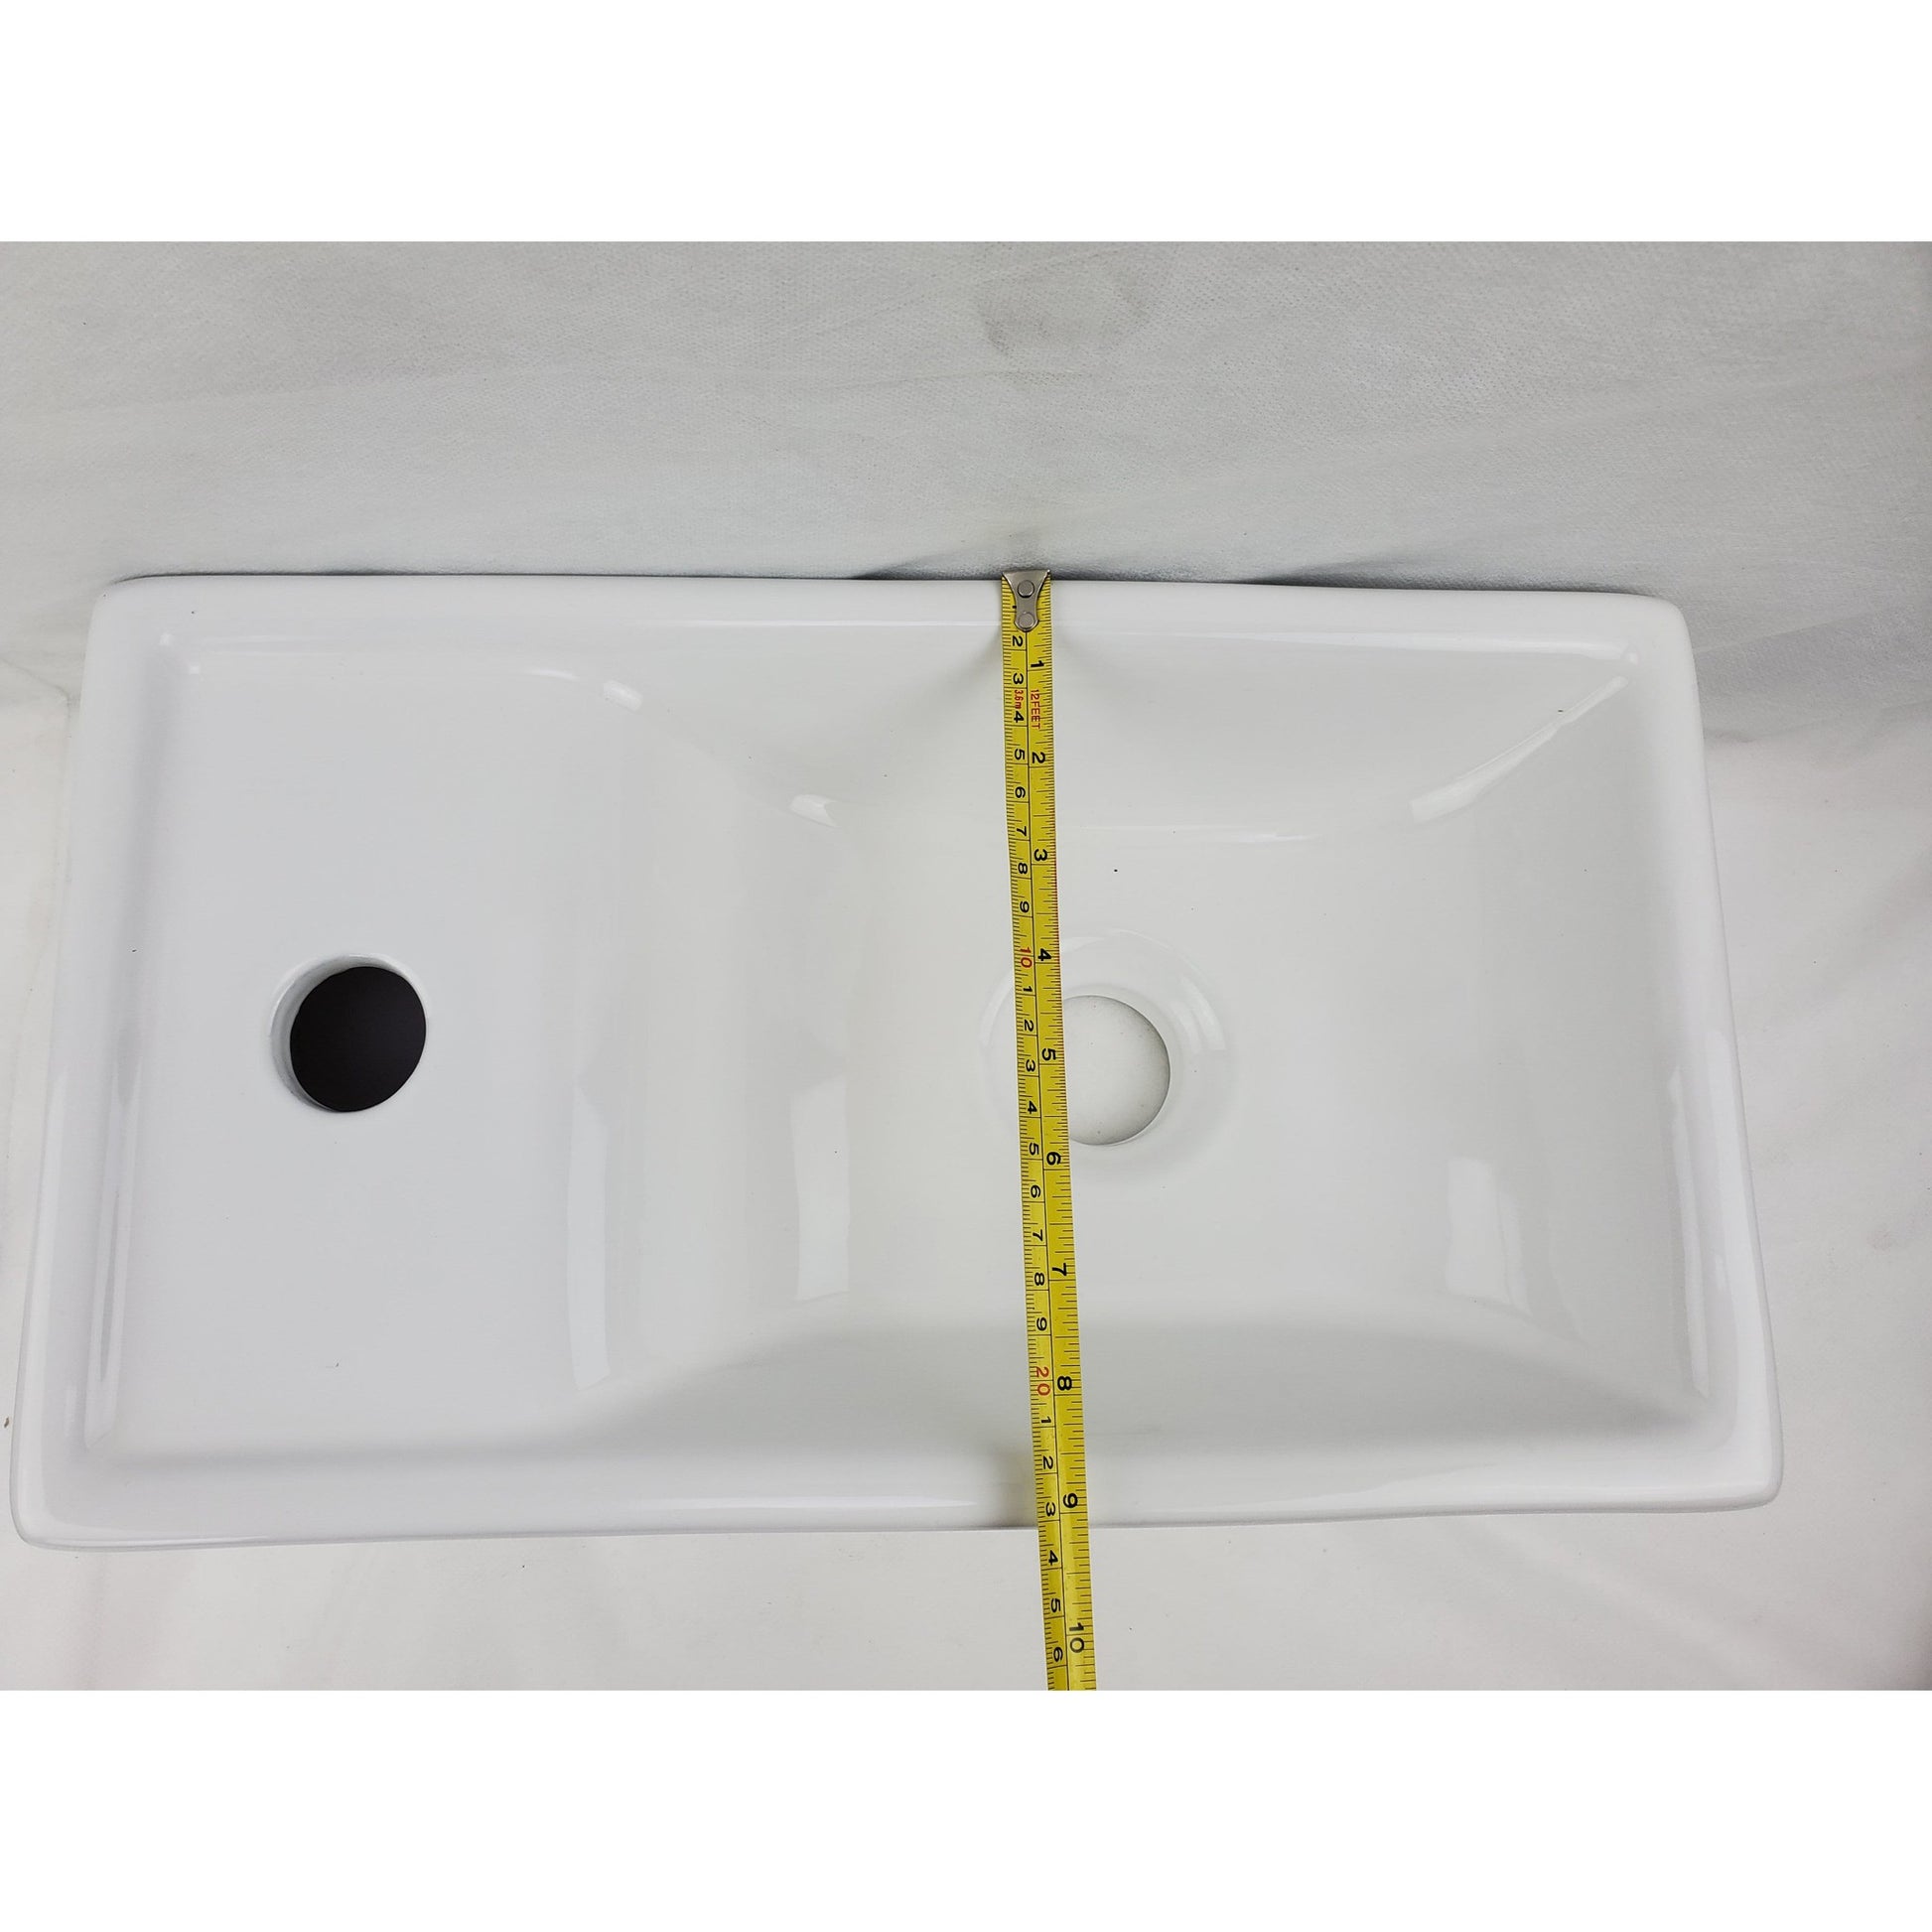 American Imaginations AI-28157 Rectangle White Ceramic Bathroom Vessel Sink with Enamel Glaze Finish